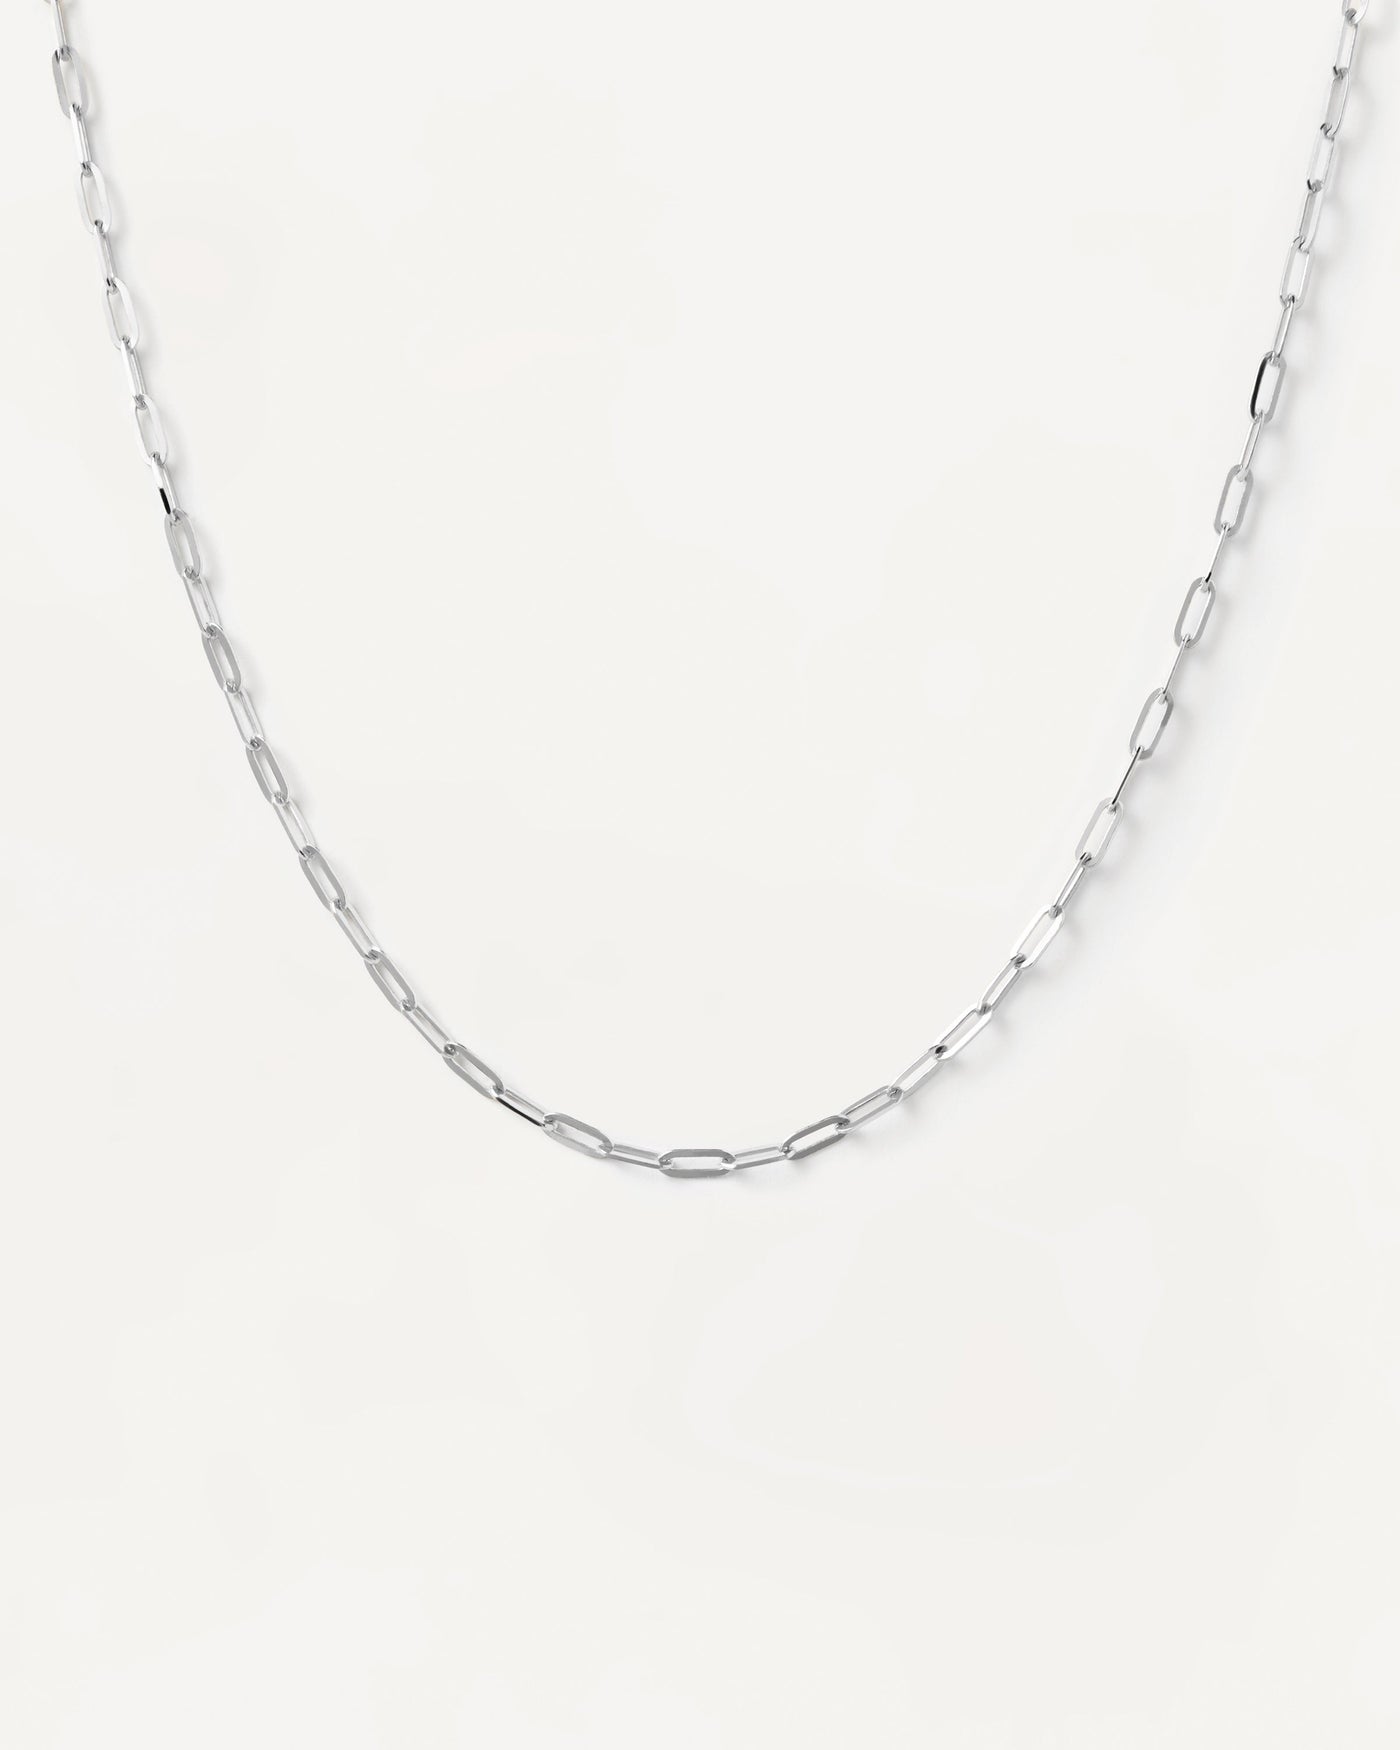 Classic Gigi White necklace, White Gold, 16.5